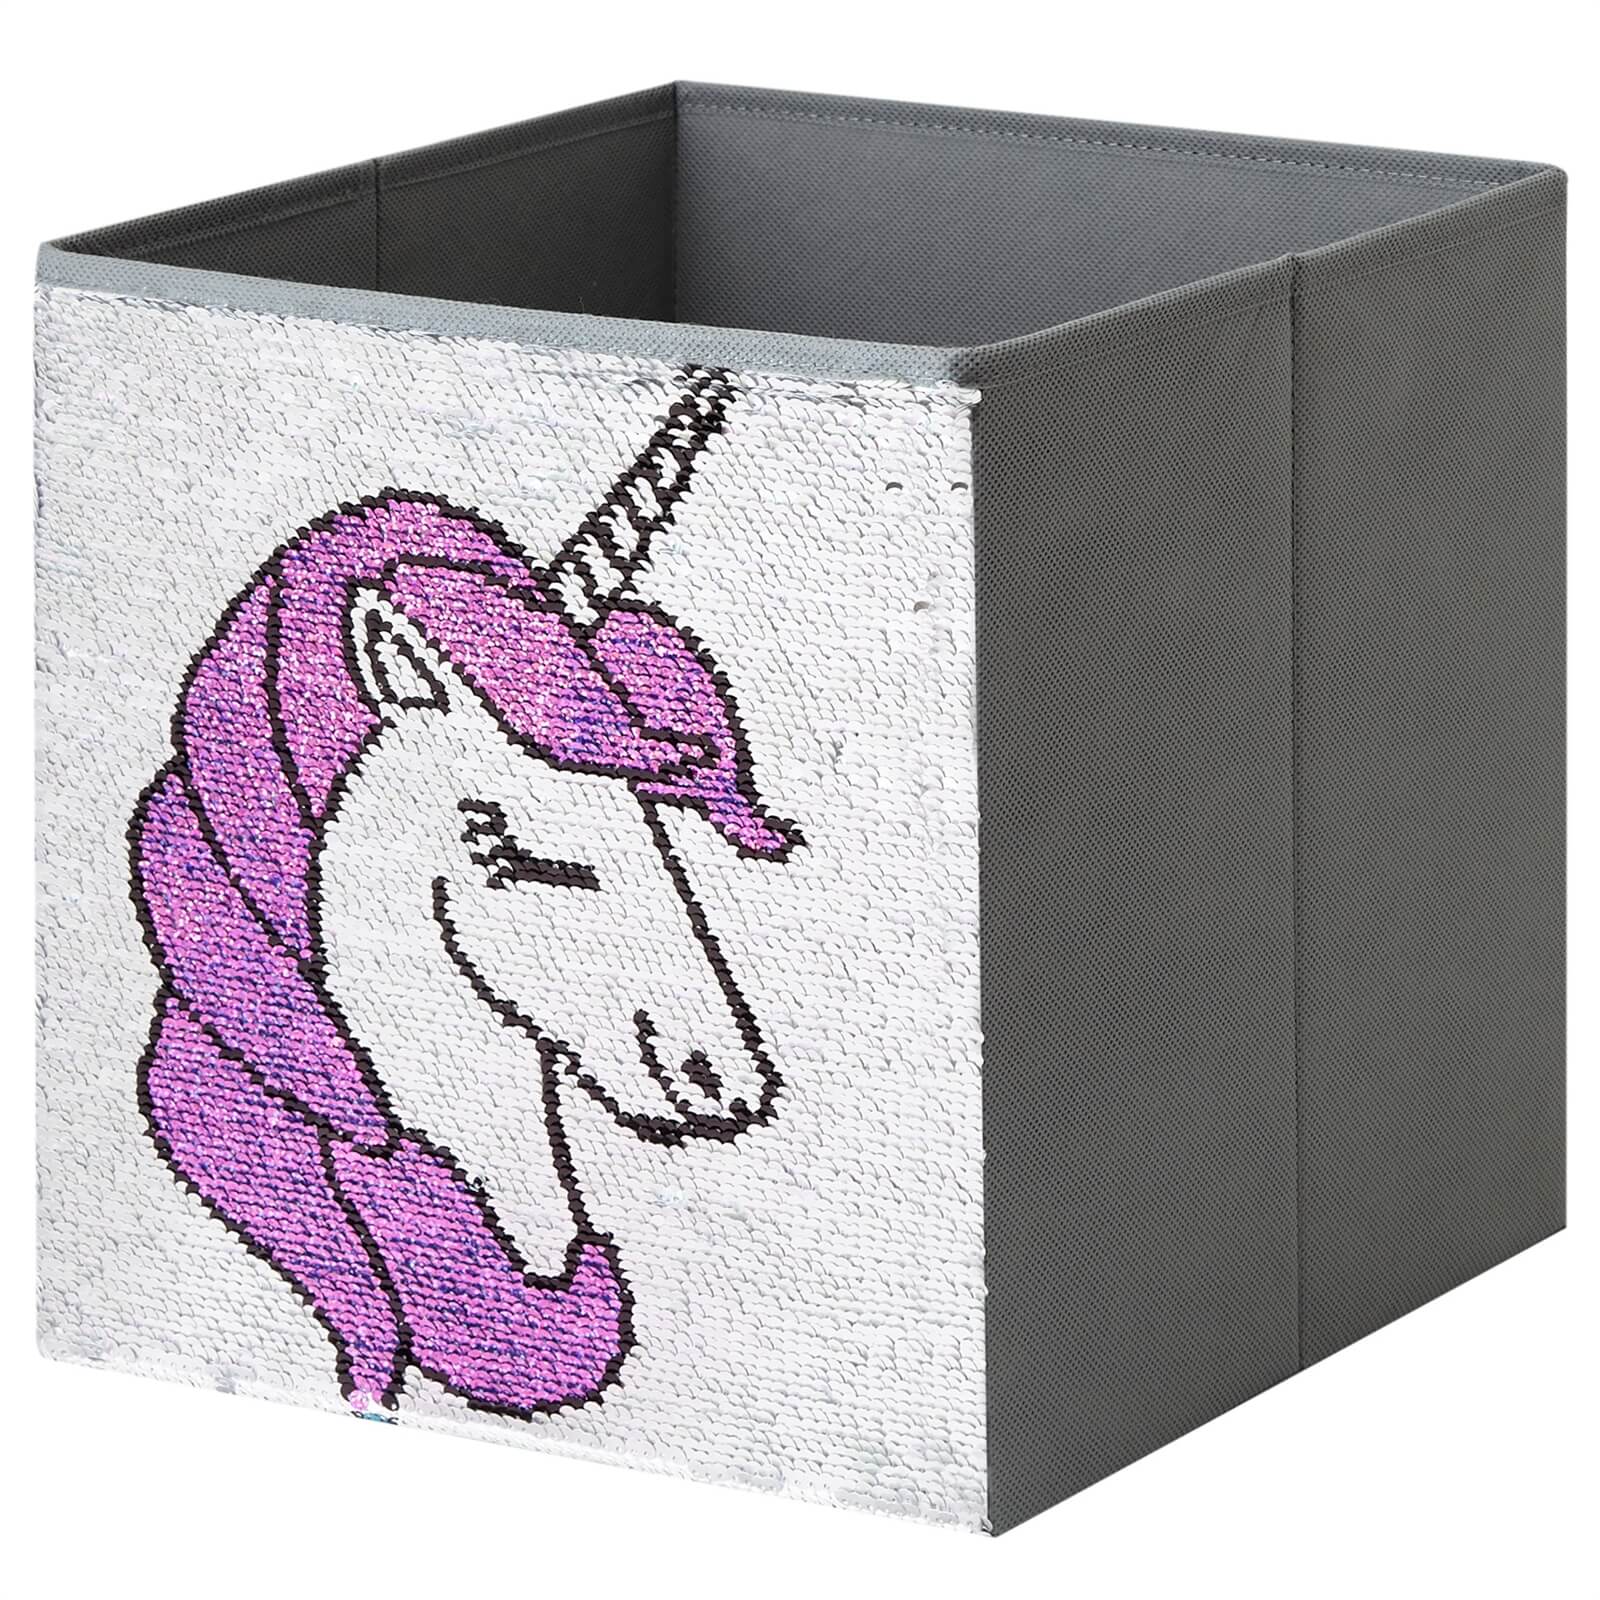 Compact Cube Fabric Insert - Sequin Unicorn